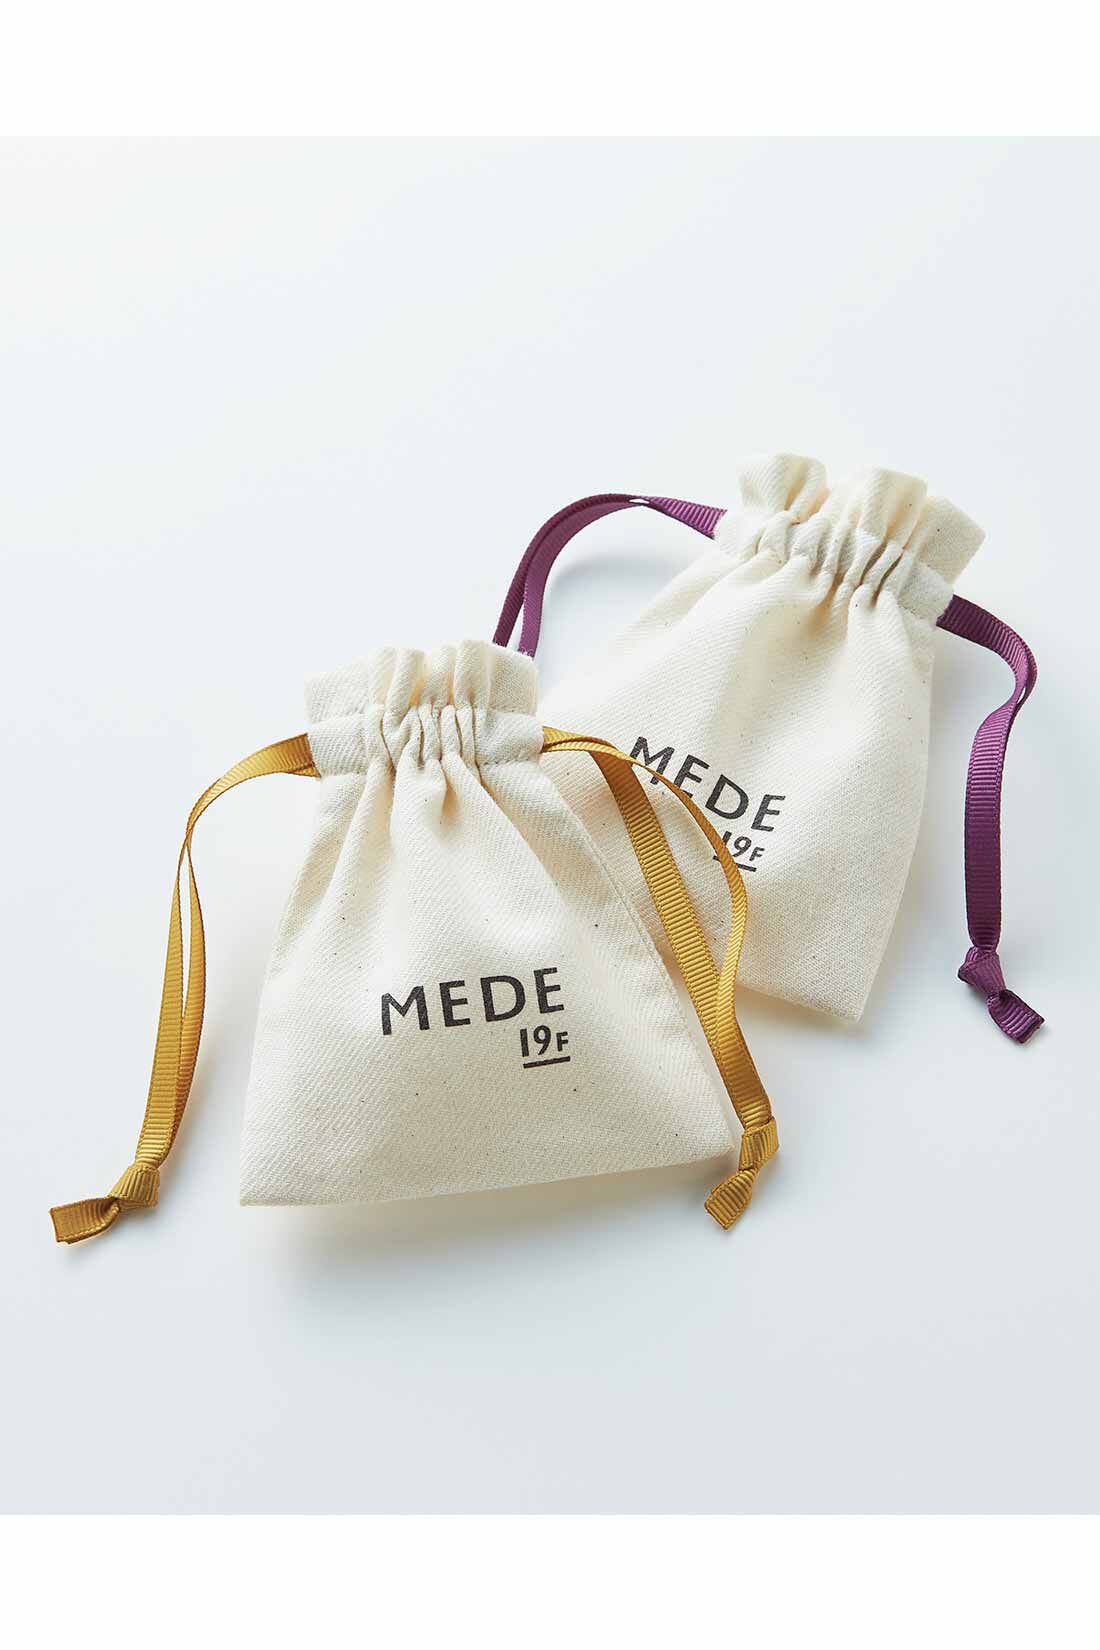 MEDE19F|YPAC for MEDE19F　フランス製陶器ボタンイヤリング type.21|MEDE19Fオリジナルきんちゃくに入れてお届けします。